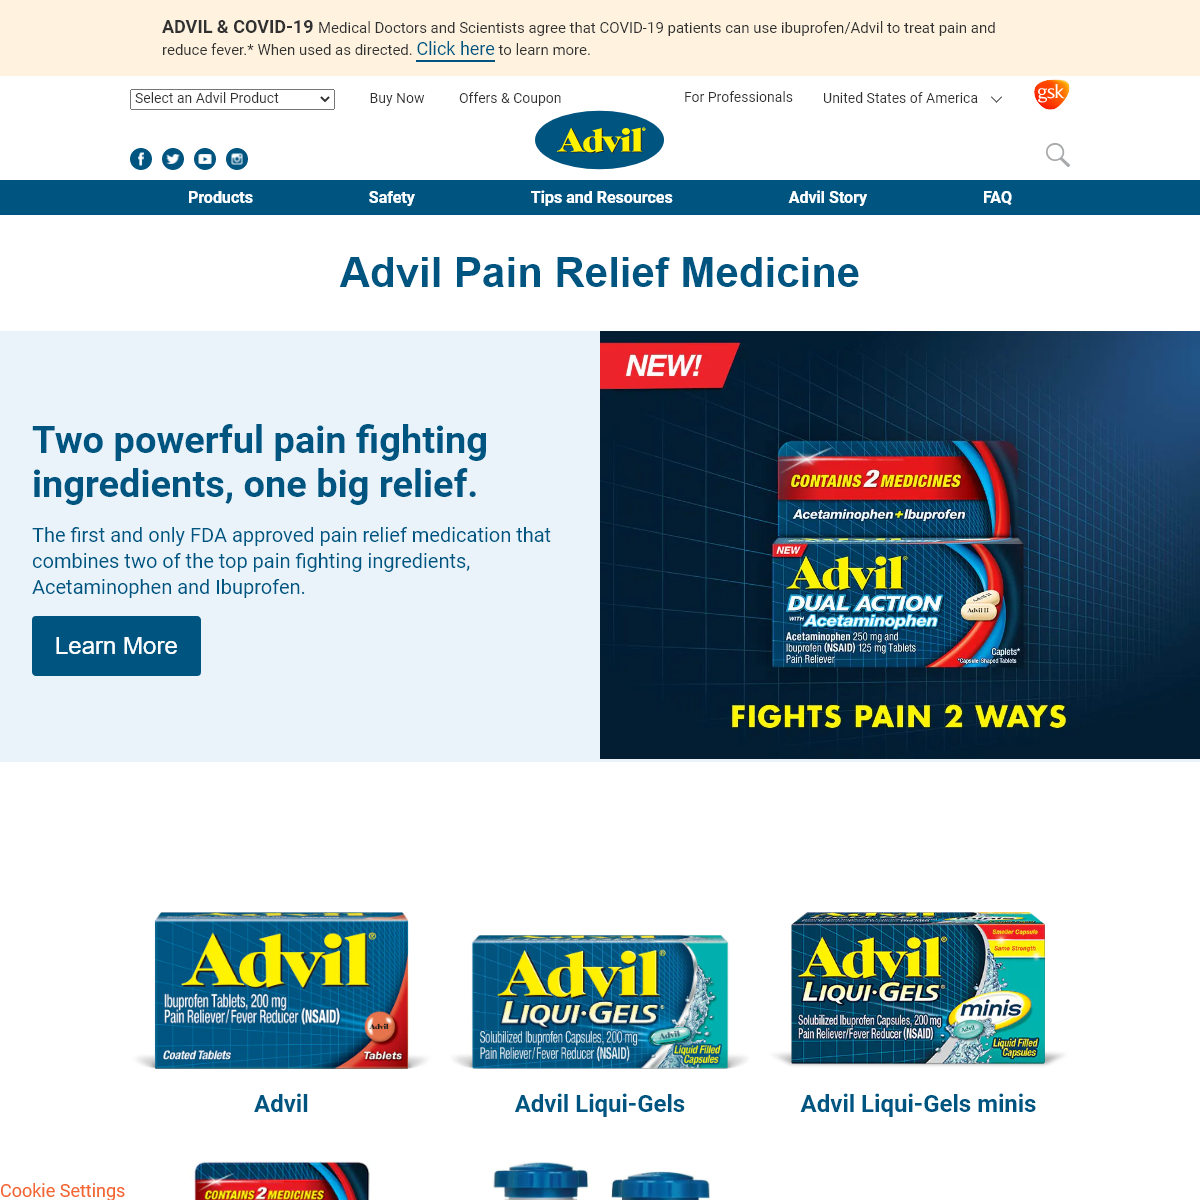 A complete backup of advil.com